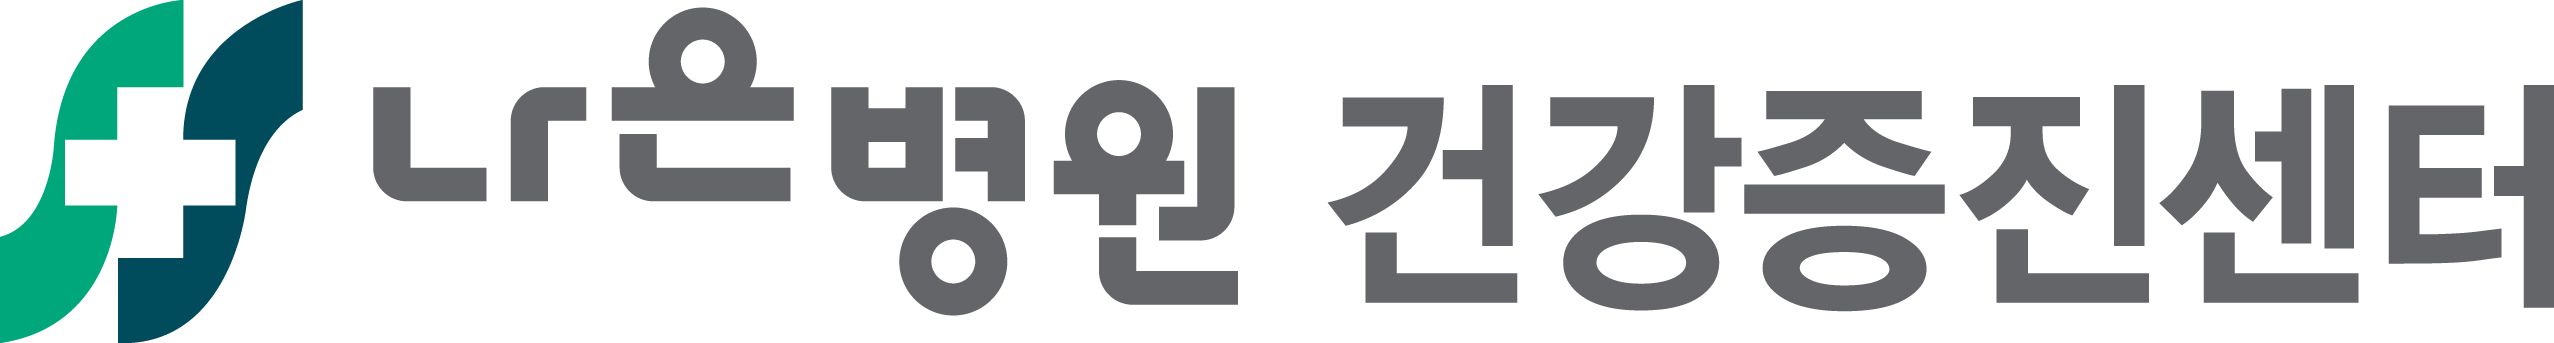 sub-logo